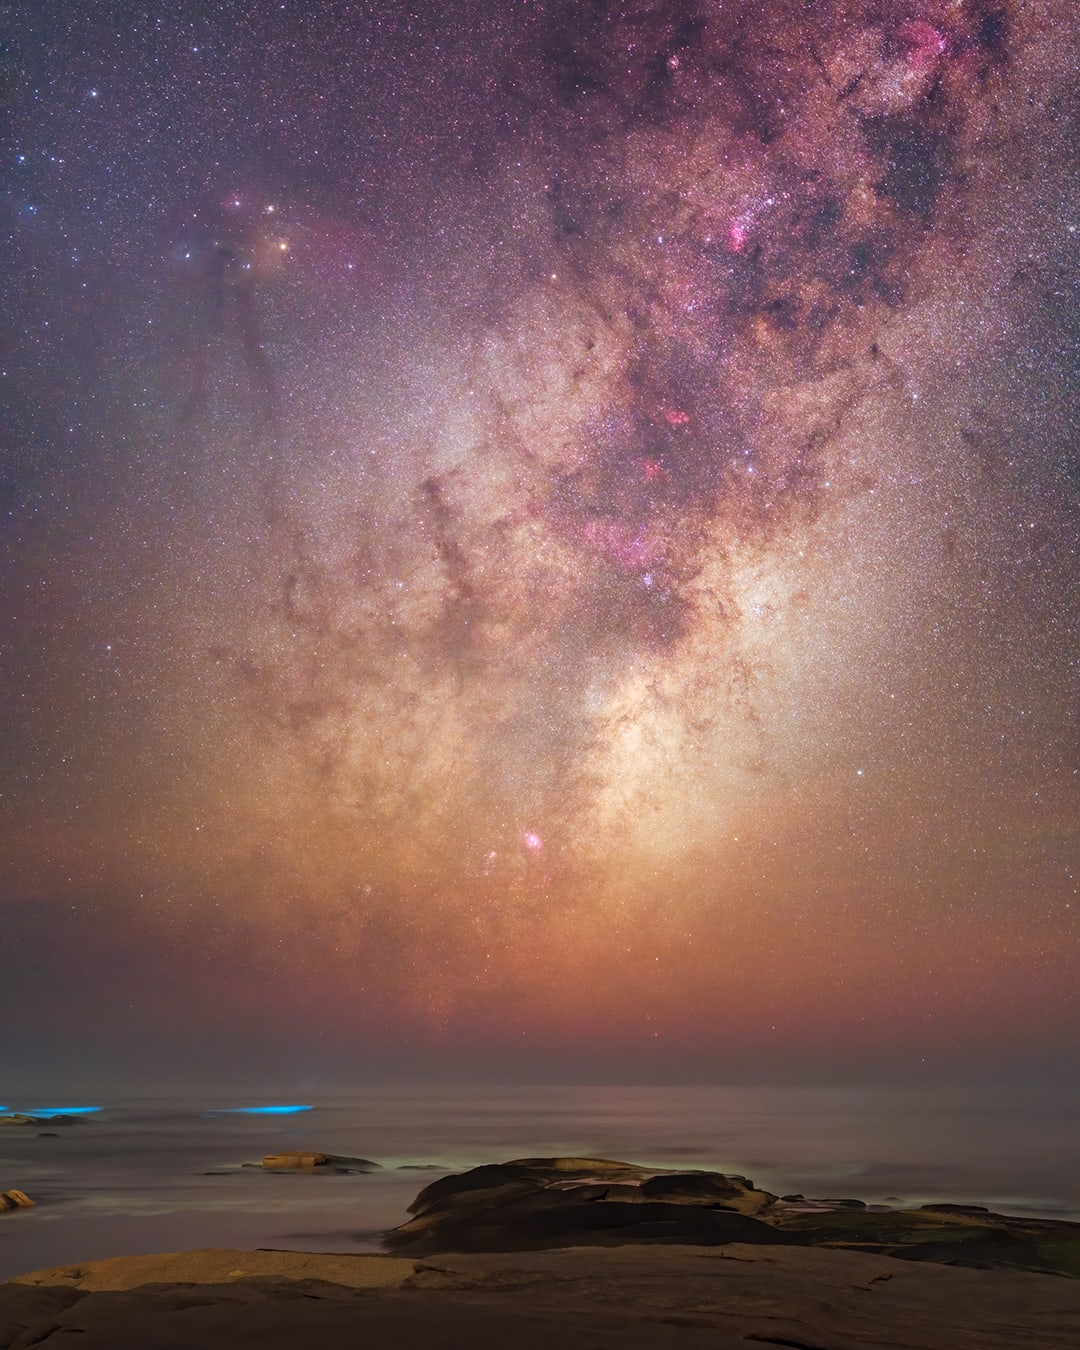 Galactic Center and bioluminescence over the Atlantic Ocean in Jose Ignacio beach, Uruguay. Milky way season 2021 already started! by @astropolo_